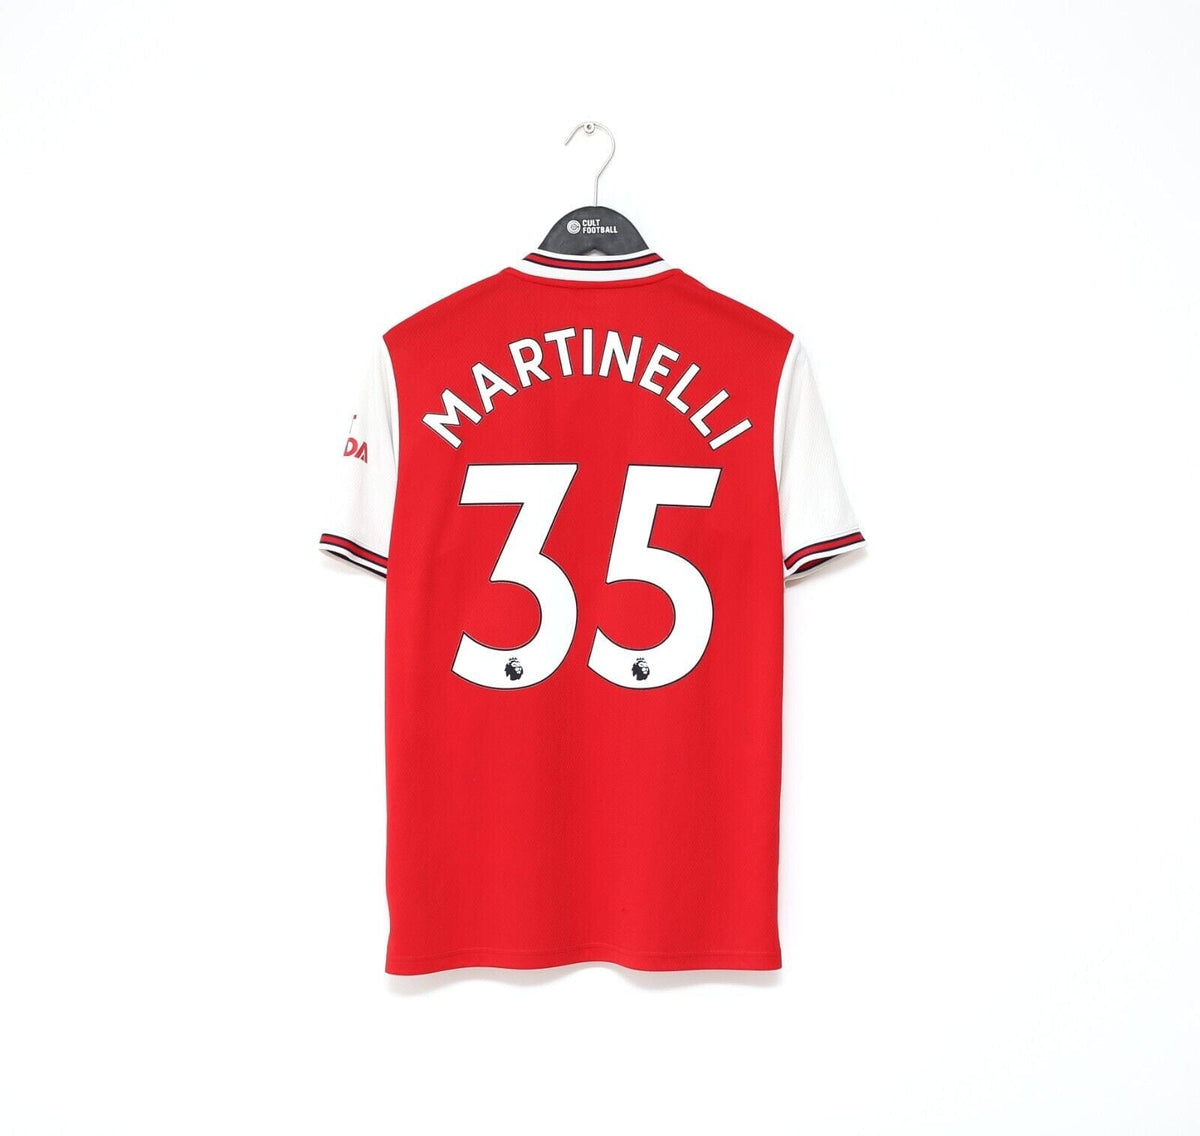 2019/20 MARTINELLI #35 Arsenal Vintage adidas Home Football Shirt (M)